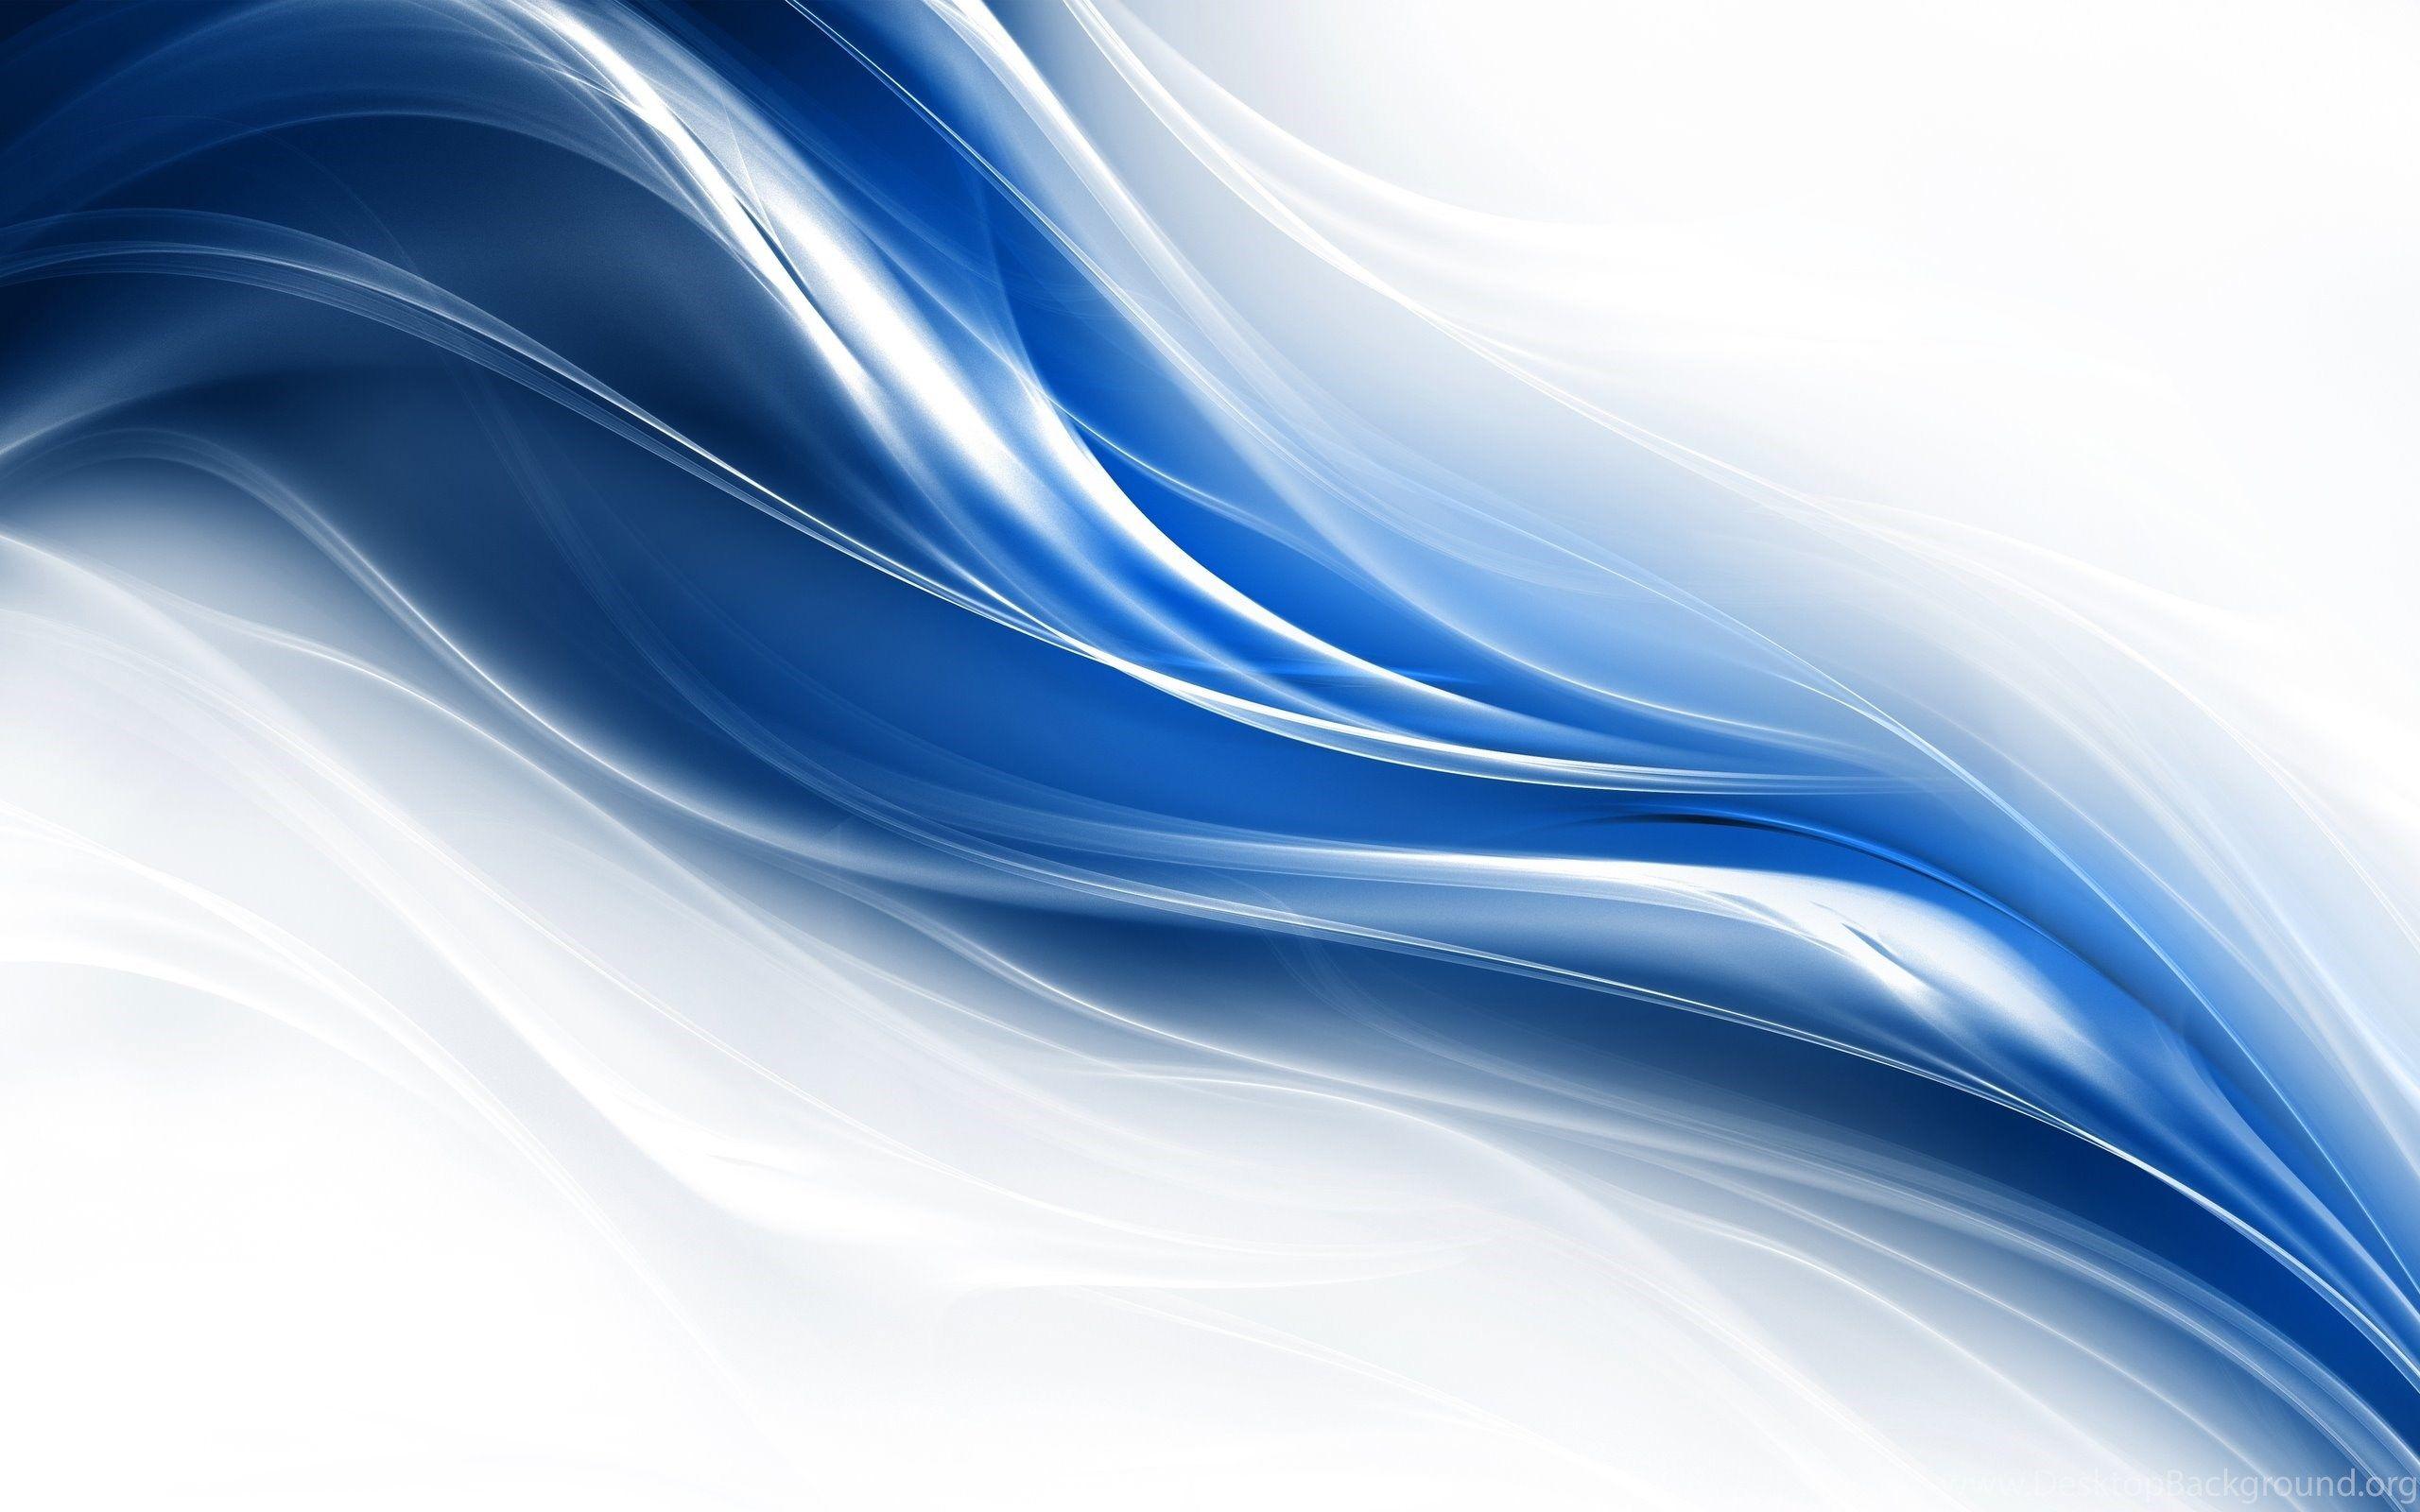 Blue wave wallpaper photos free download 7373 jpg files